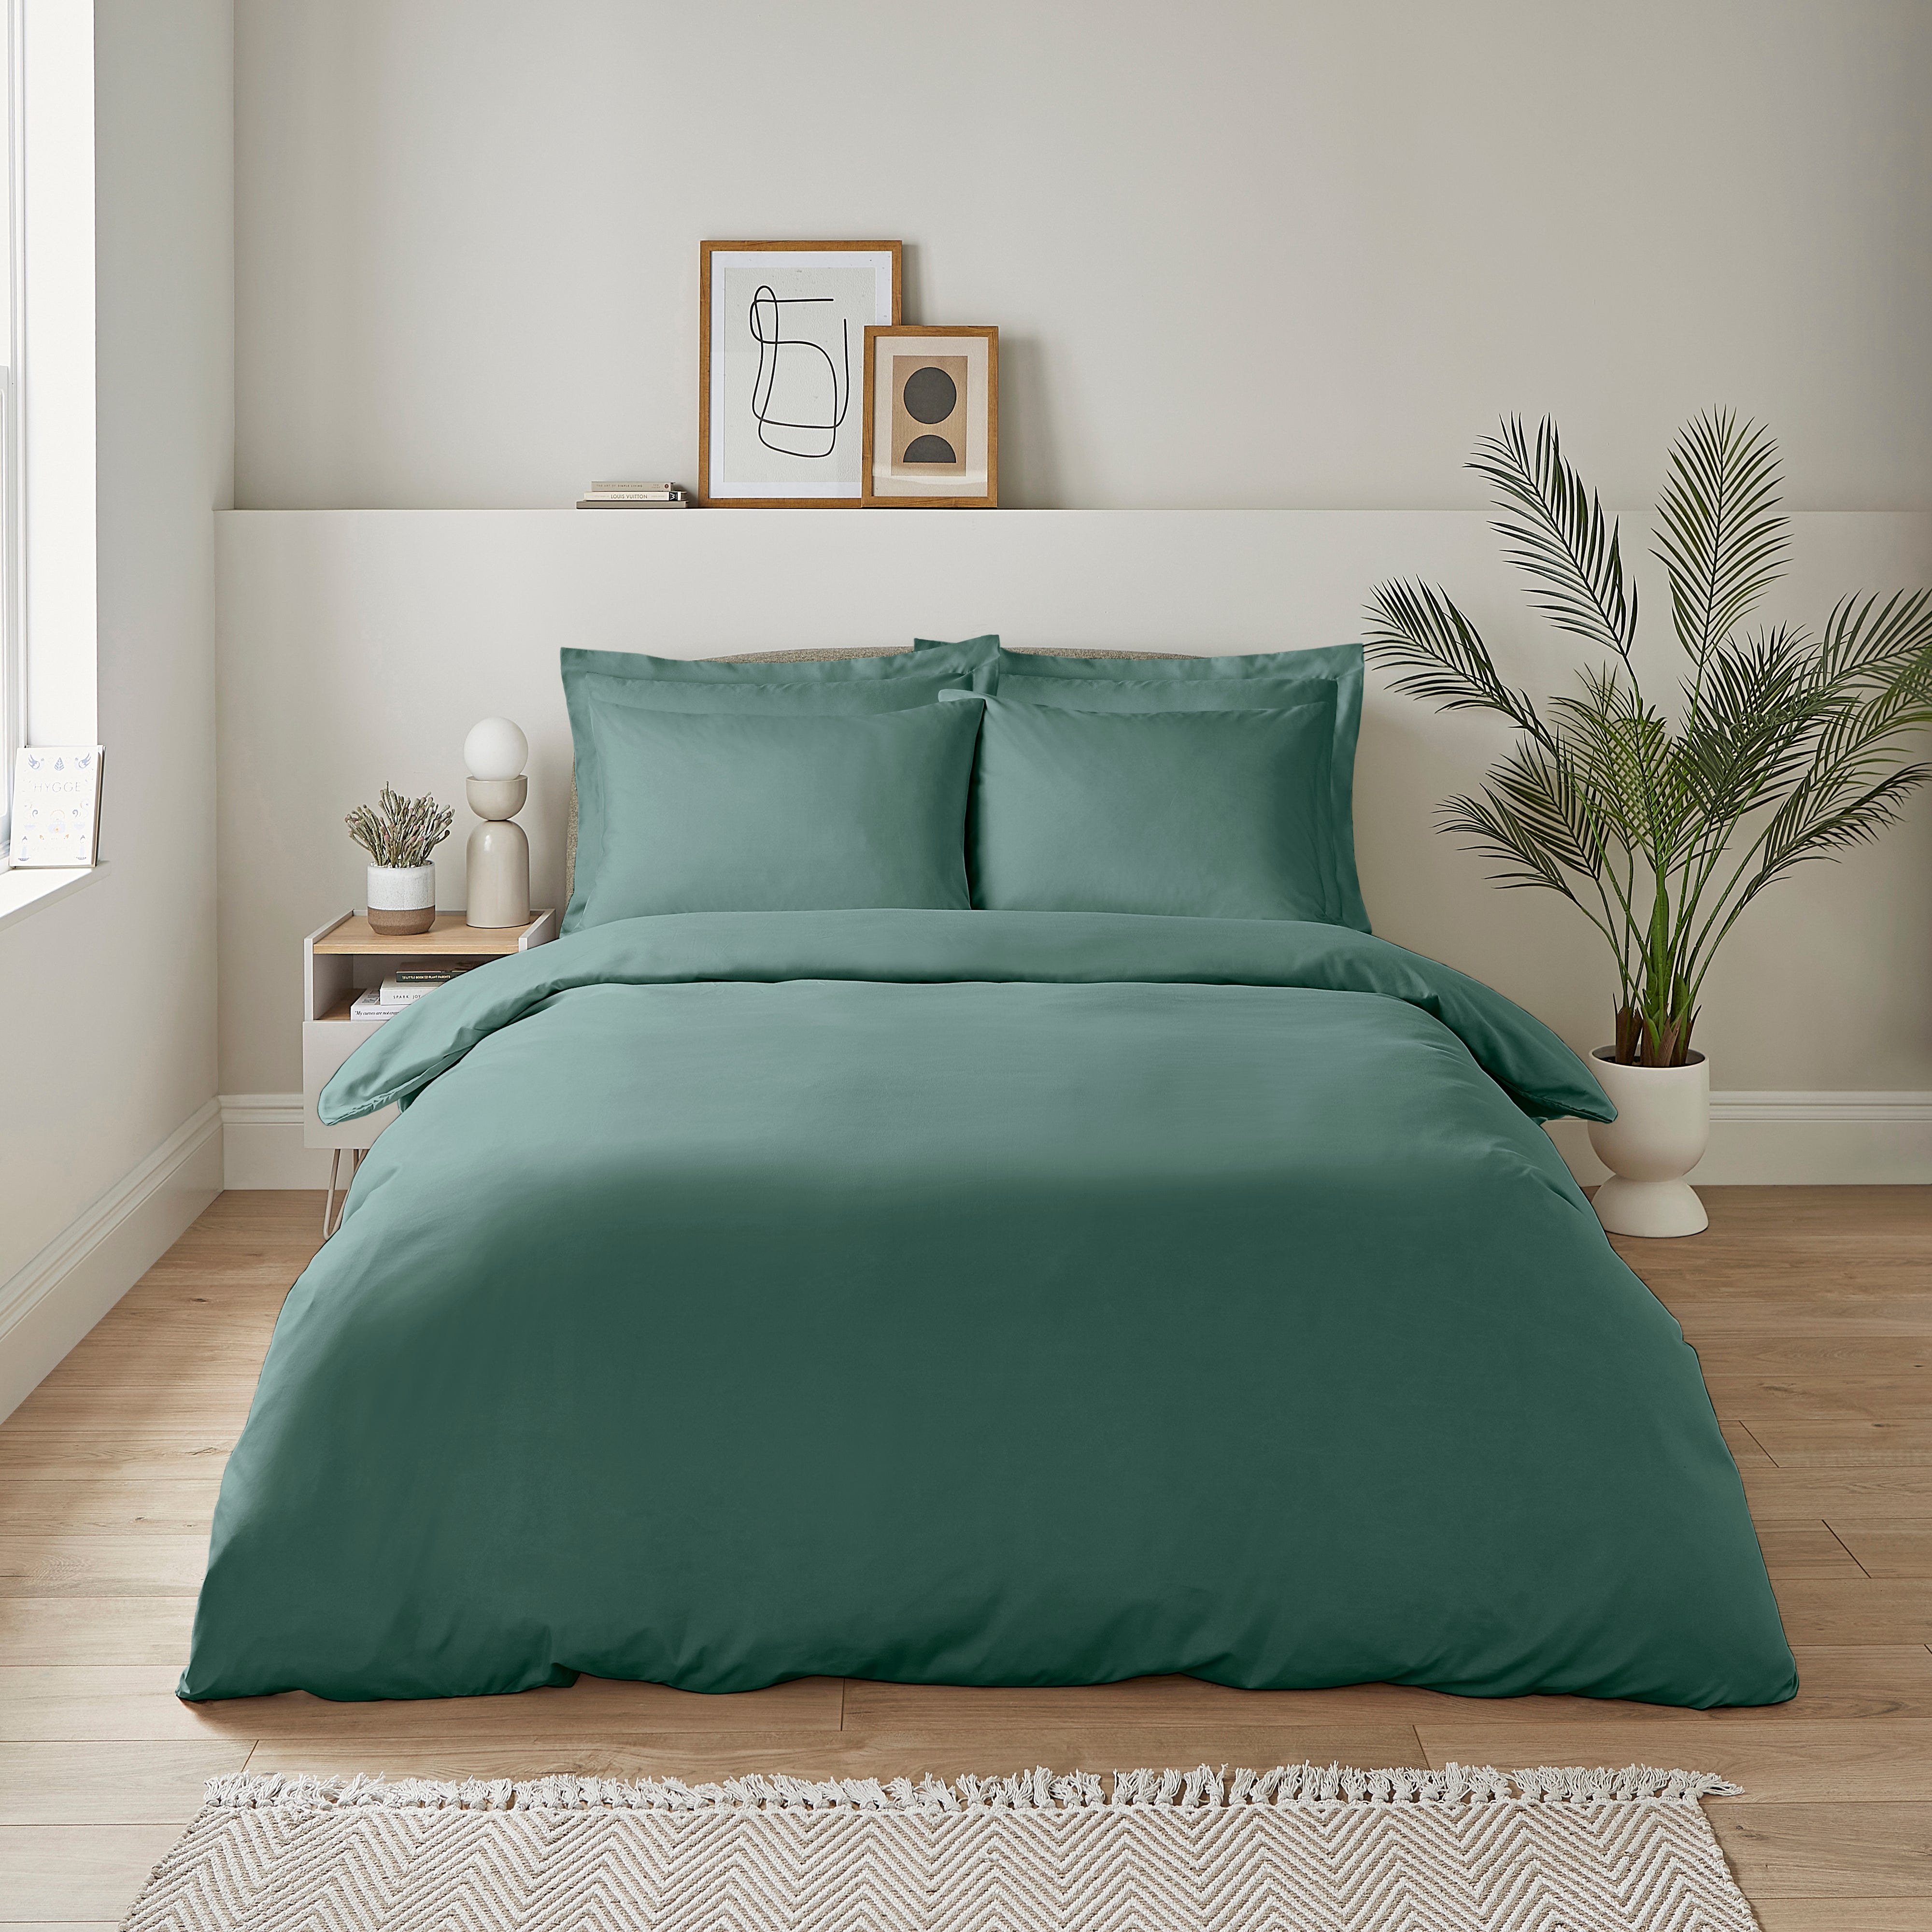 Super Soft Microfibre Plain Duvet Cover And Pillowcase Set Forest Green